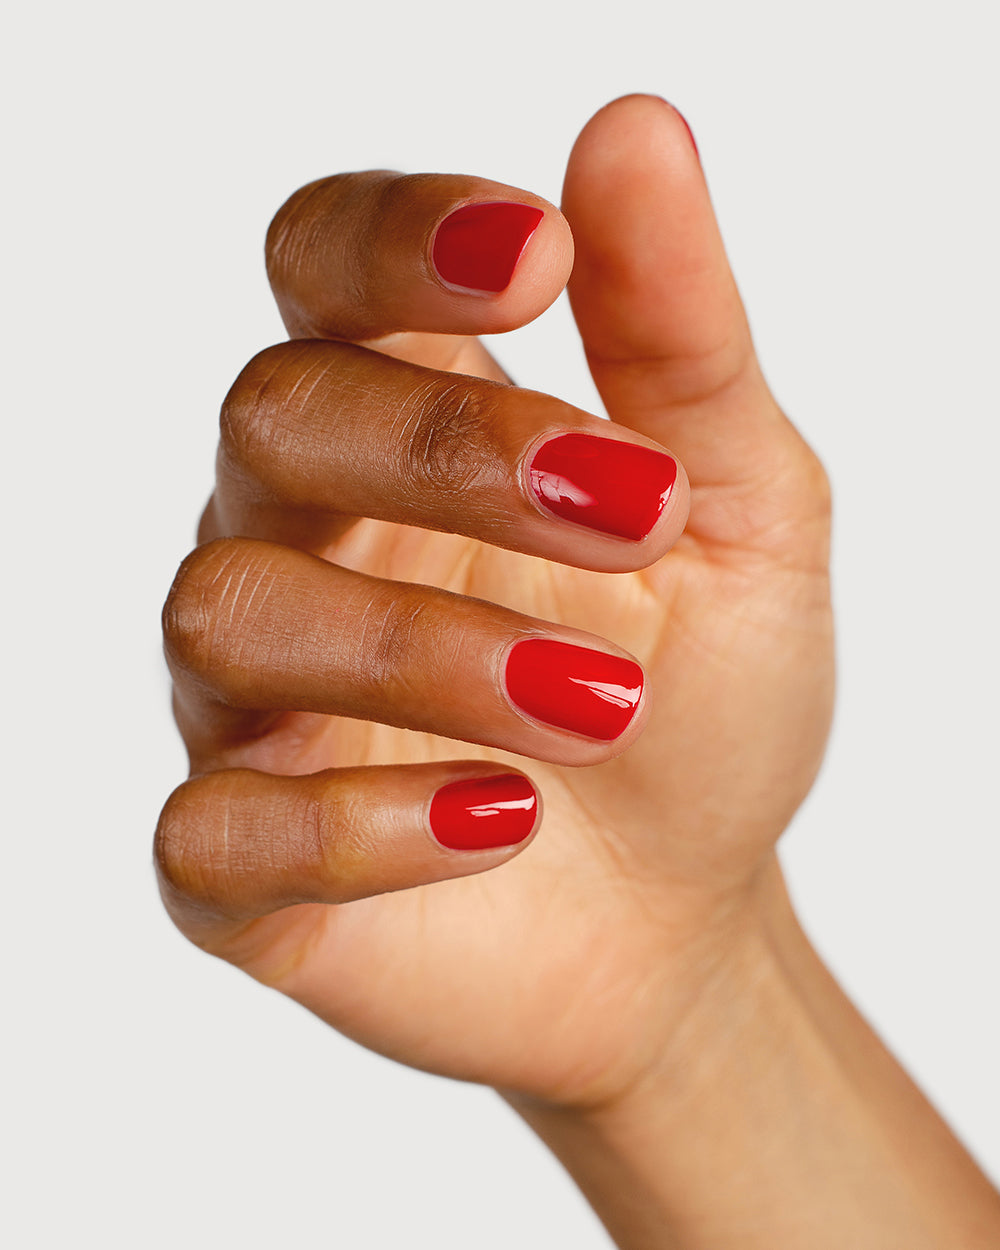 Classic red nail polish hand swatch on medium skin tone